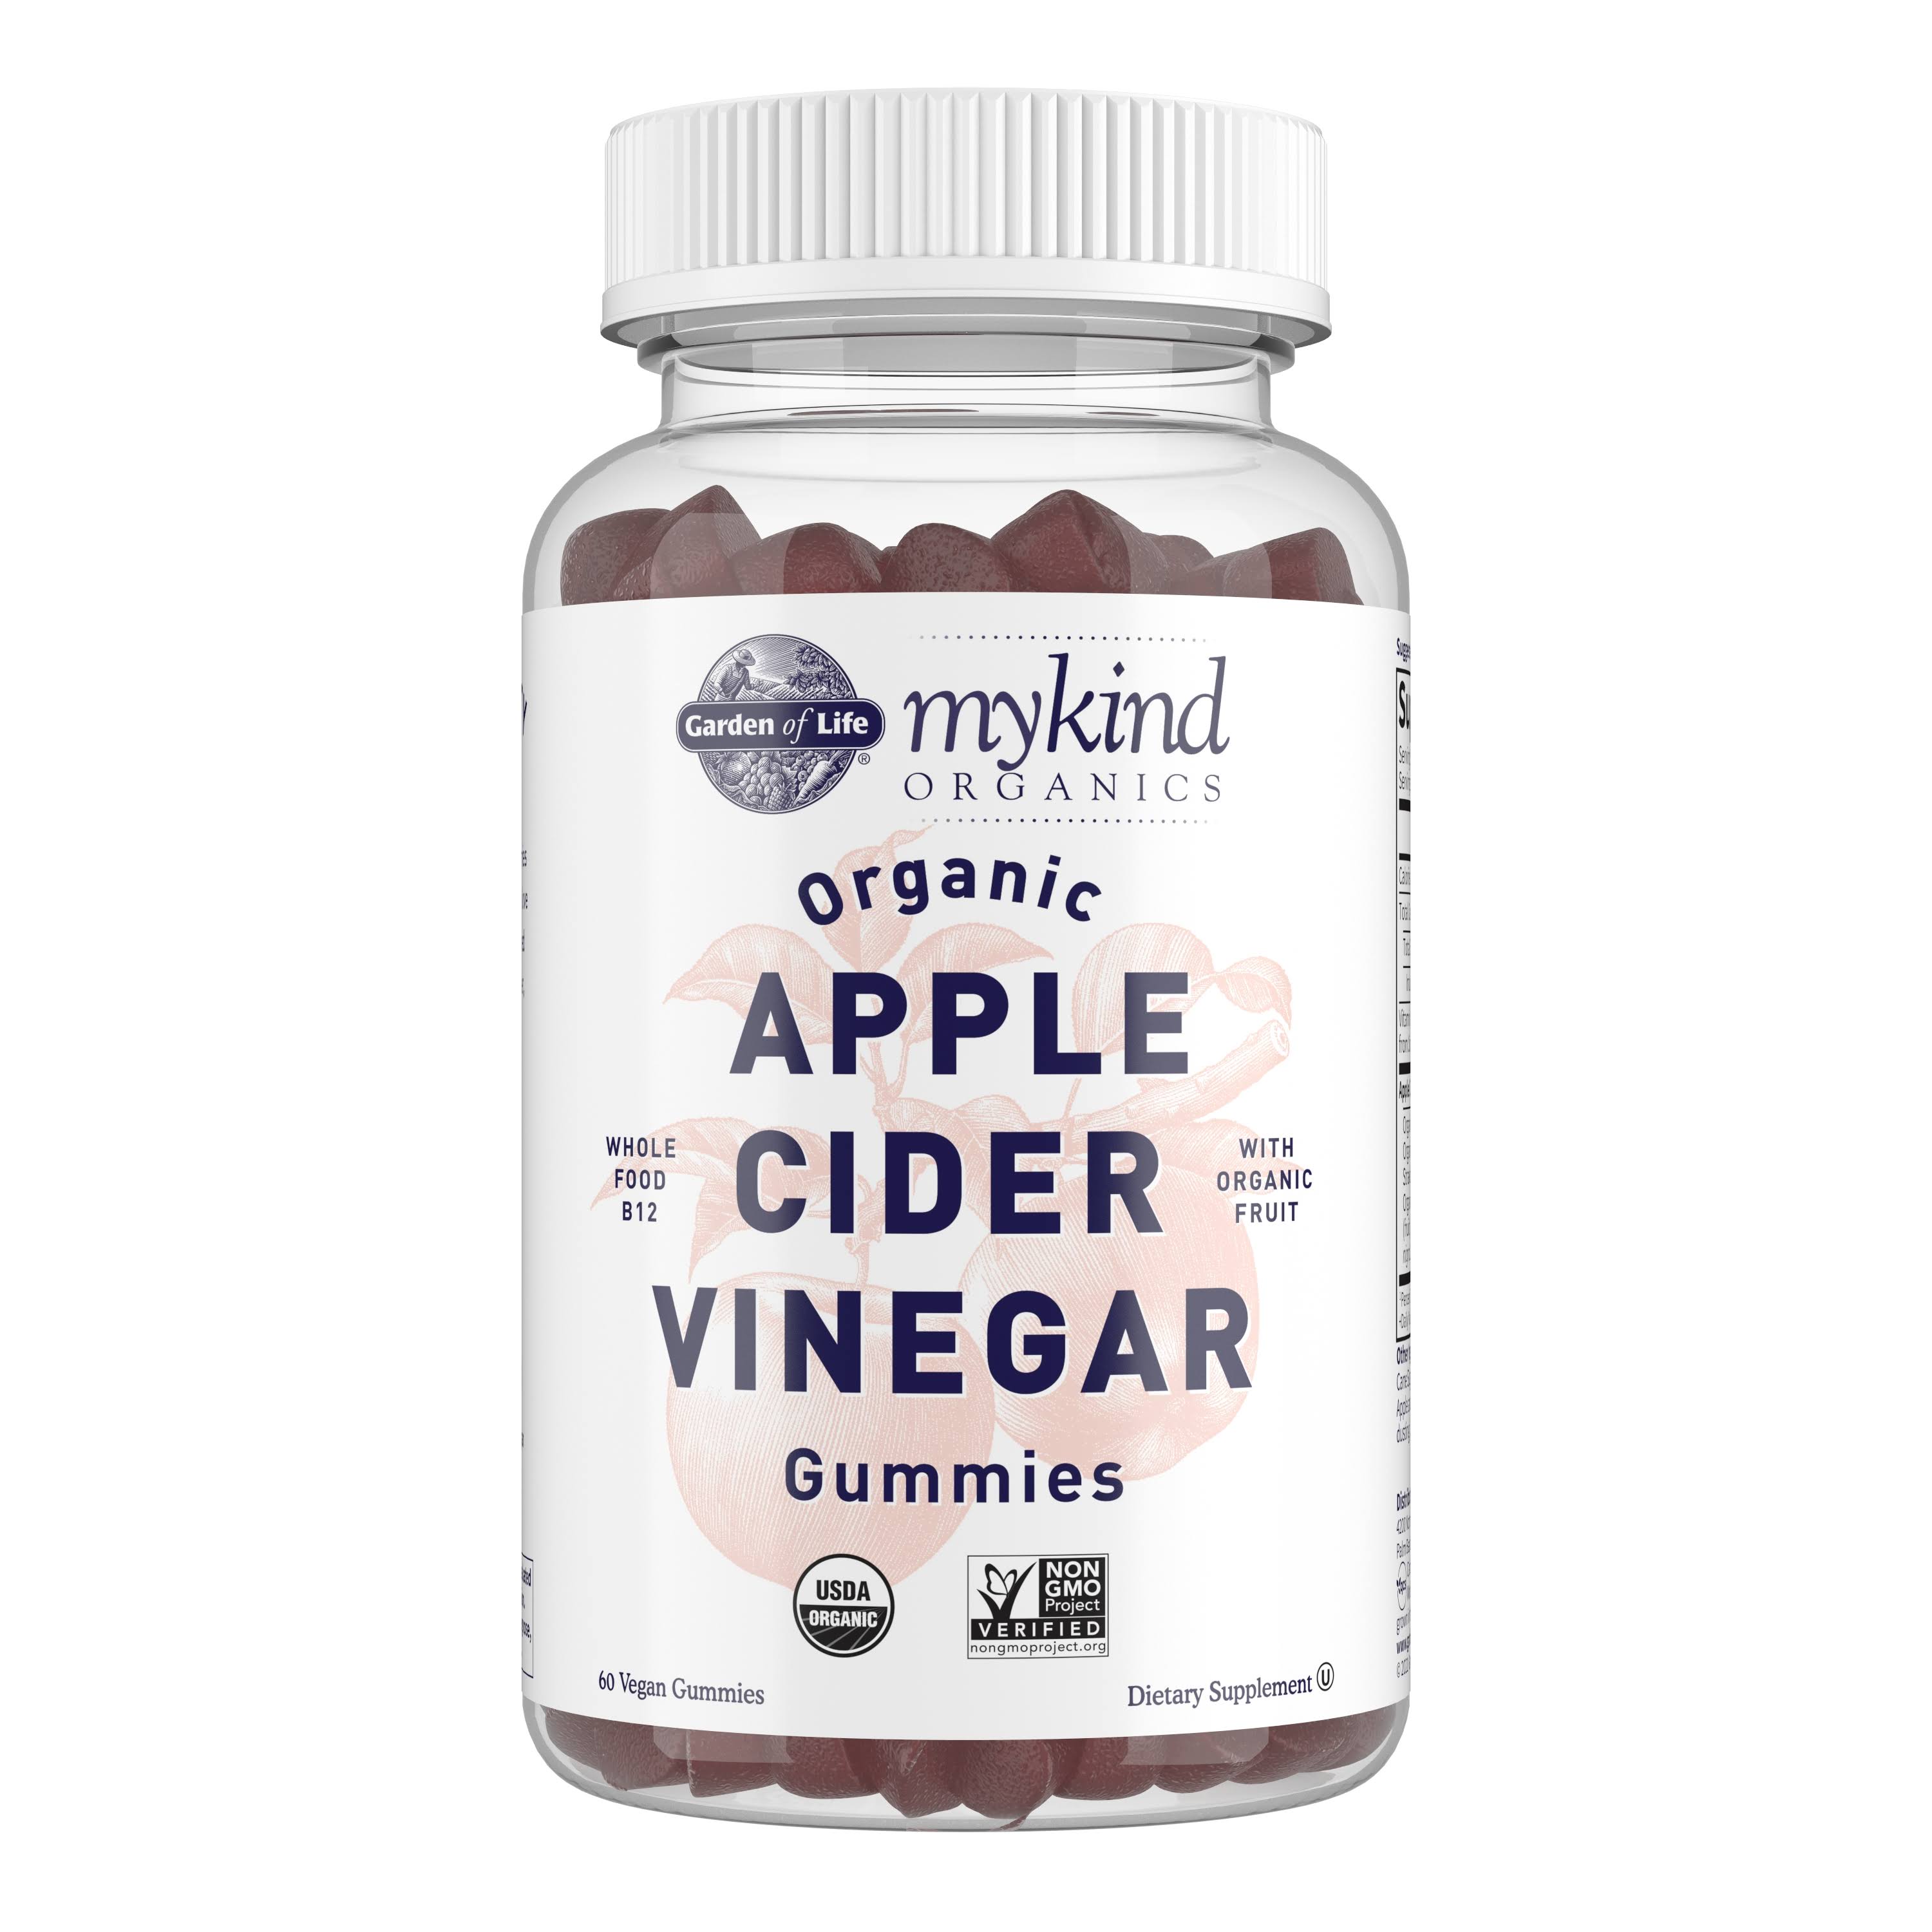 Apple Cider Vinegar - mykind Organics - 60 Gummies - Garden of Life